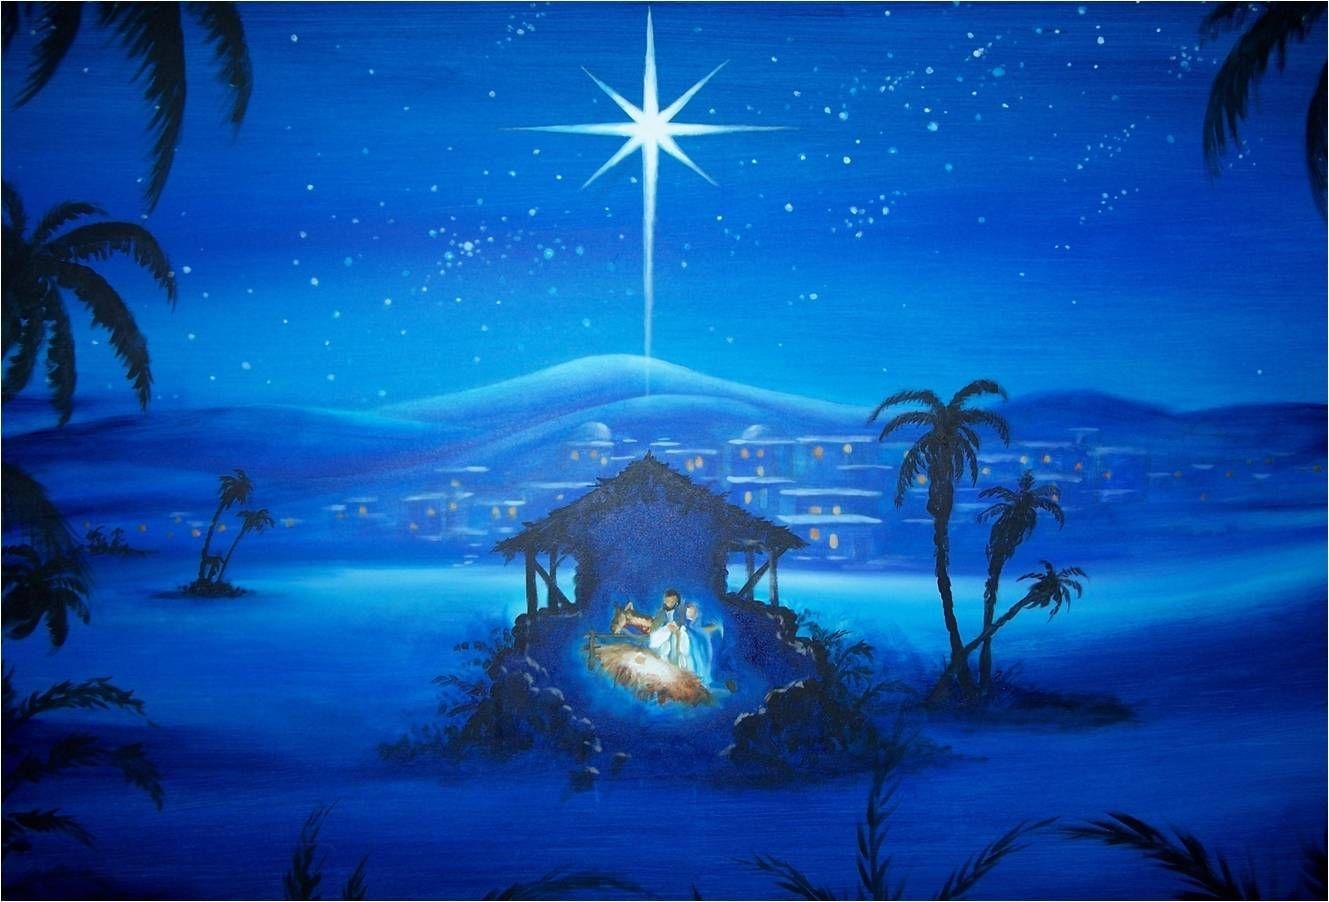 Christmas Computer Wallpaper. Nativity painting, Christmas nativity scene, Christmas nativity image